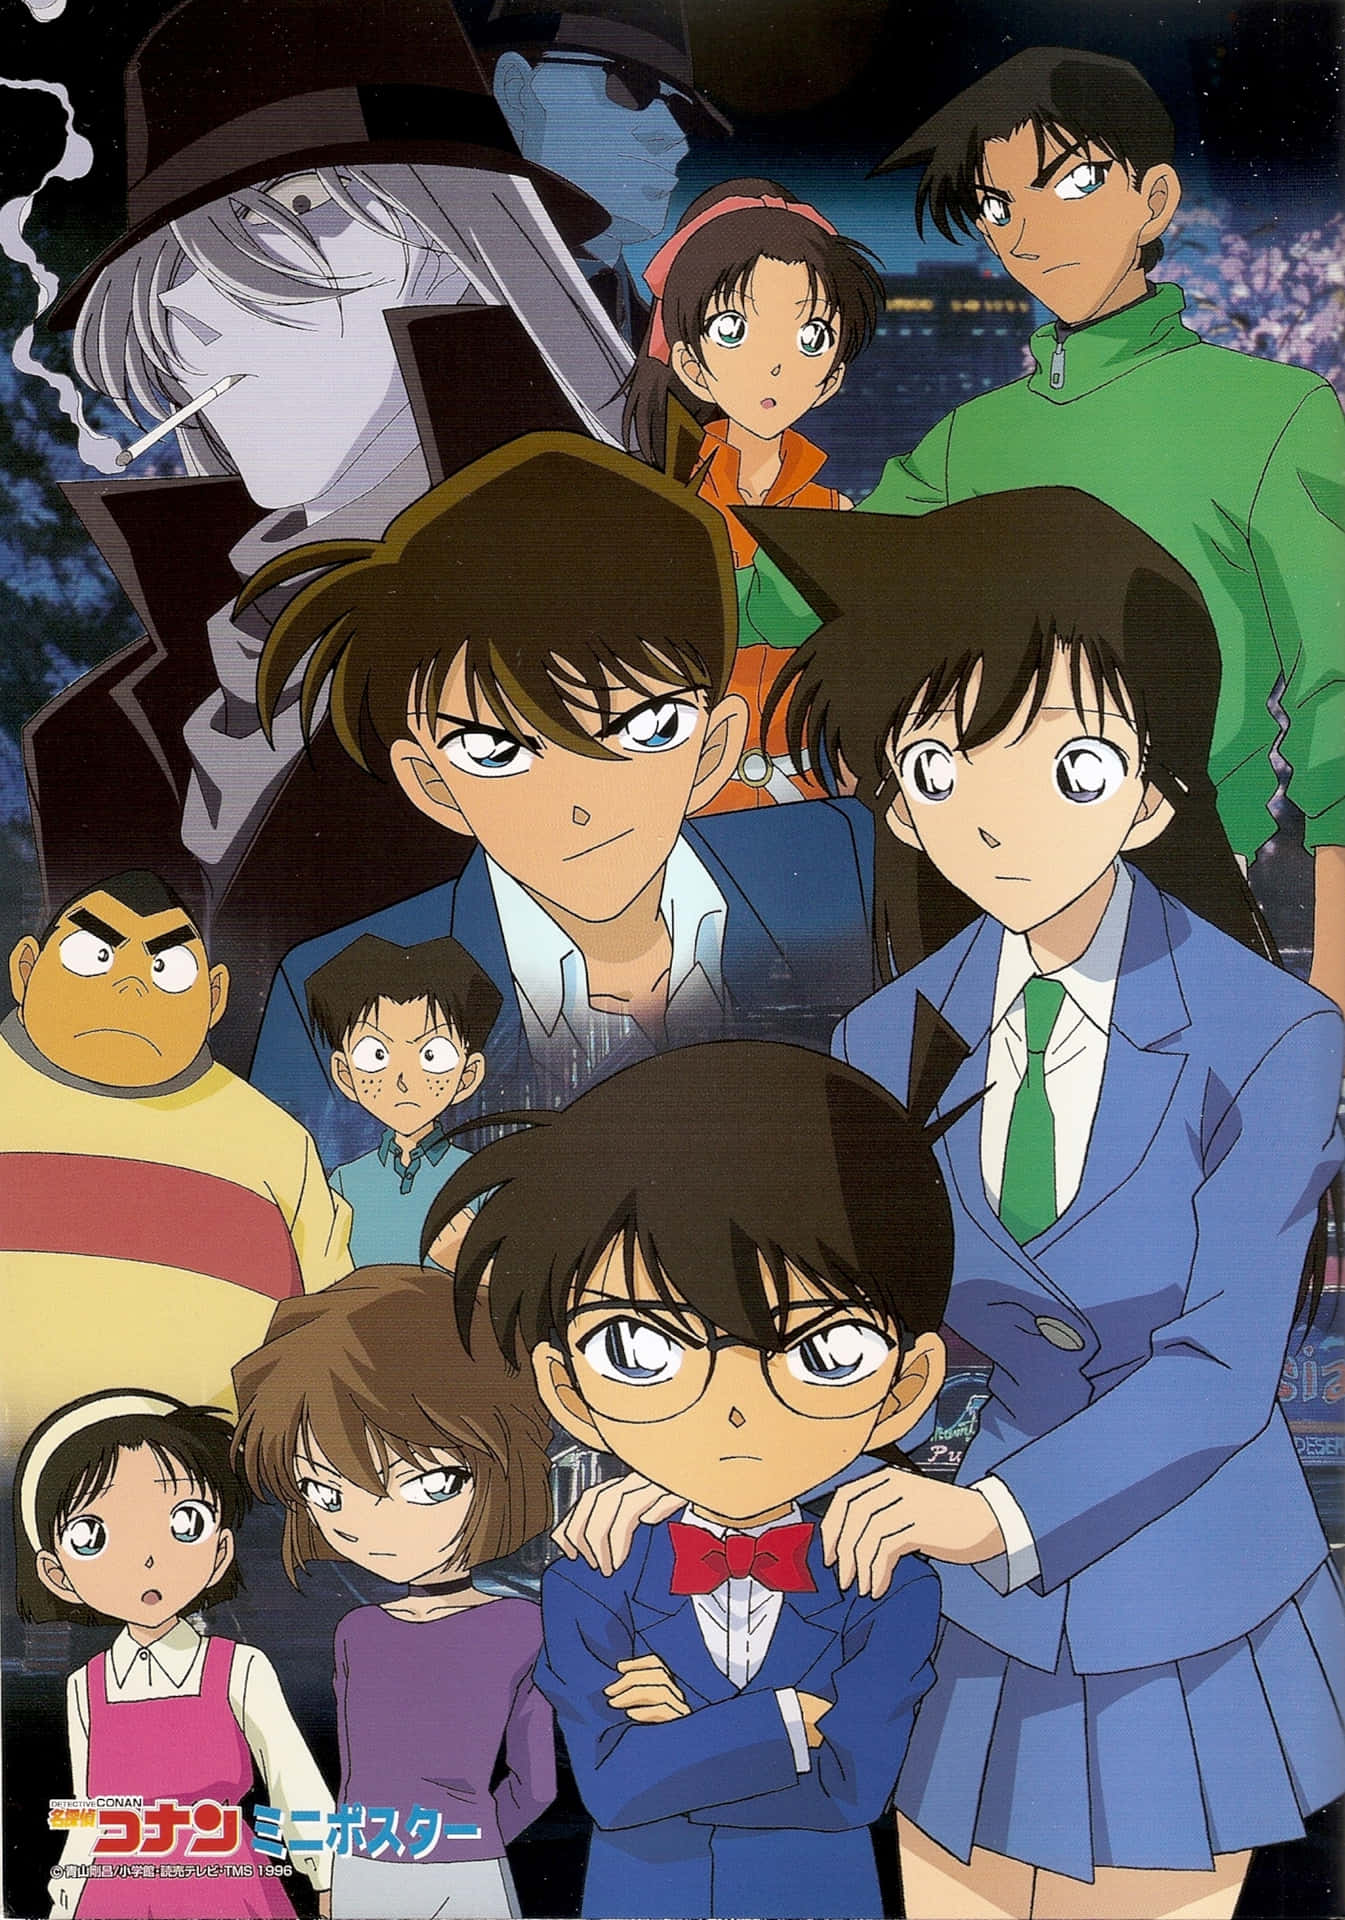 Kudo Shinichi of Detective Conan - Unraveling the Mystery